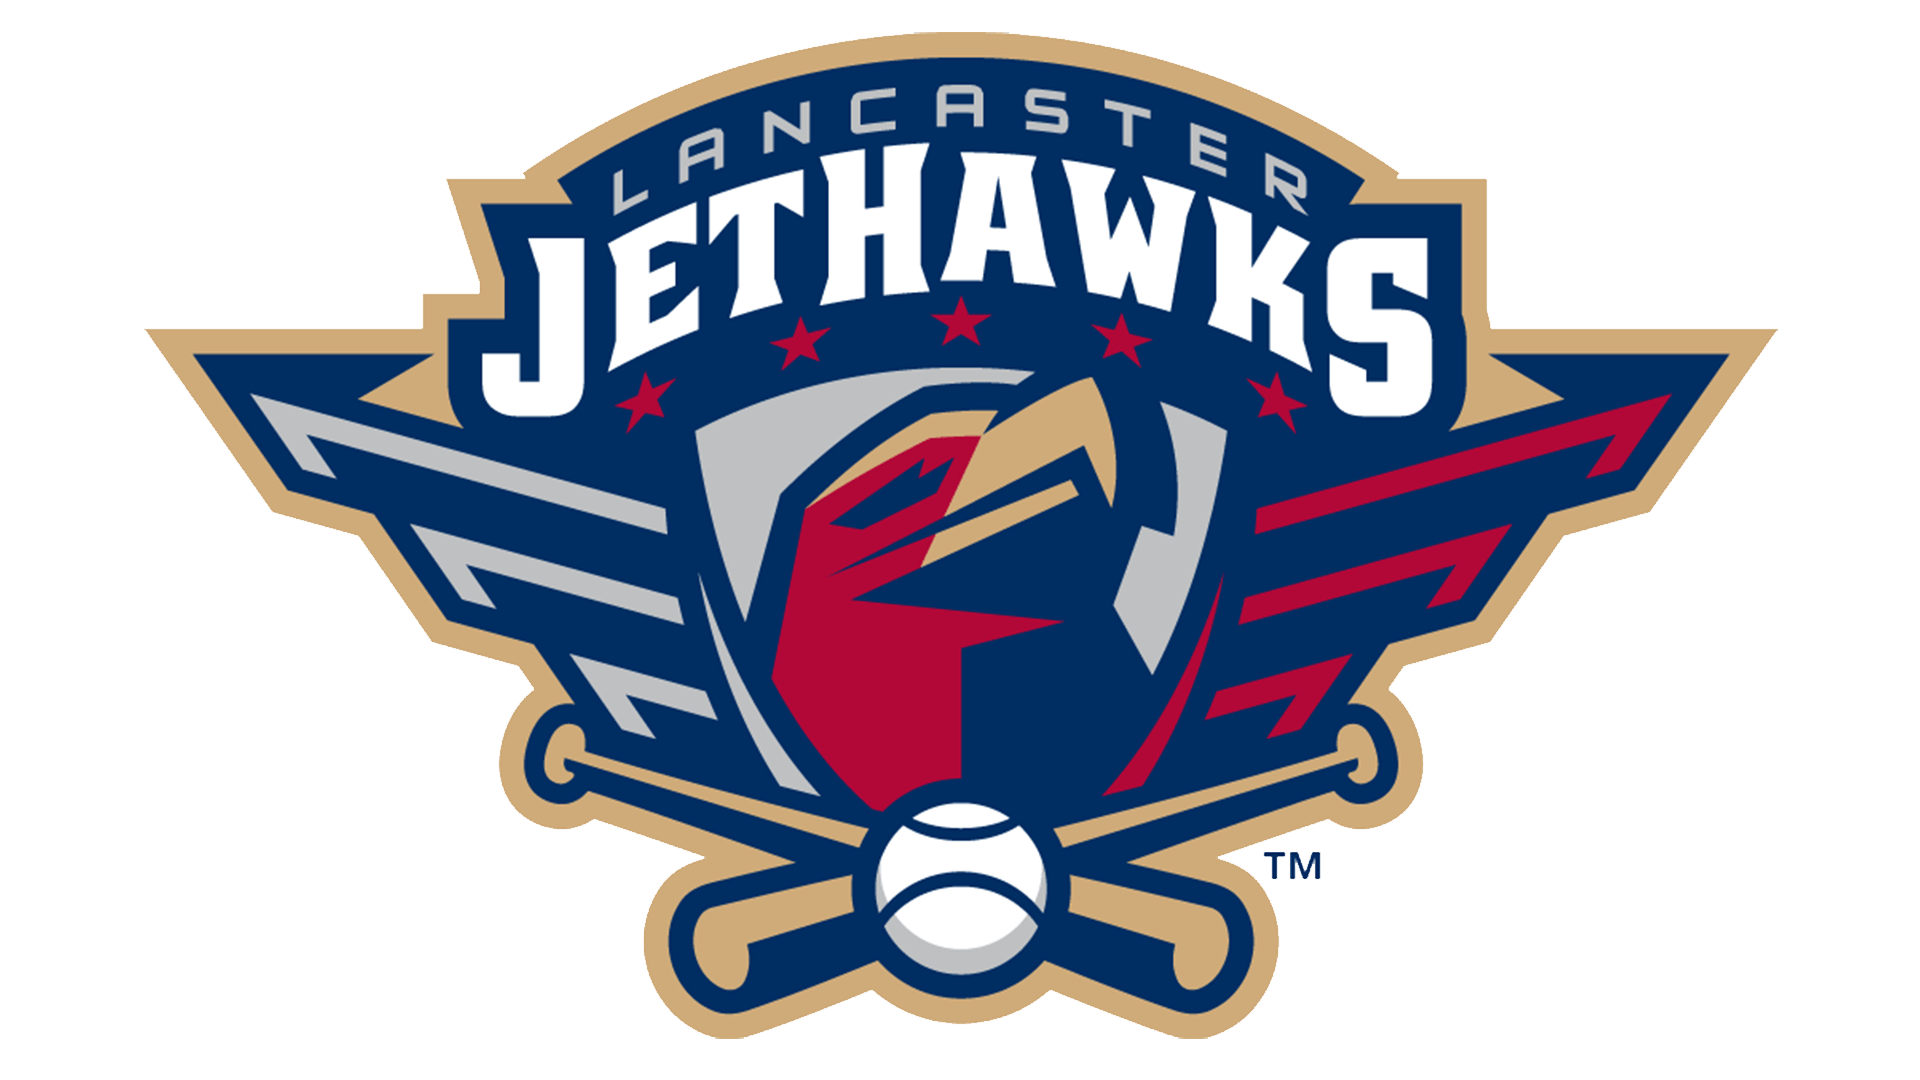 JetHawks Logo - Lancaster Jethawks logo, Lancaster Jethawks Symbol, Meaning, History ...